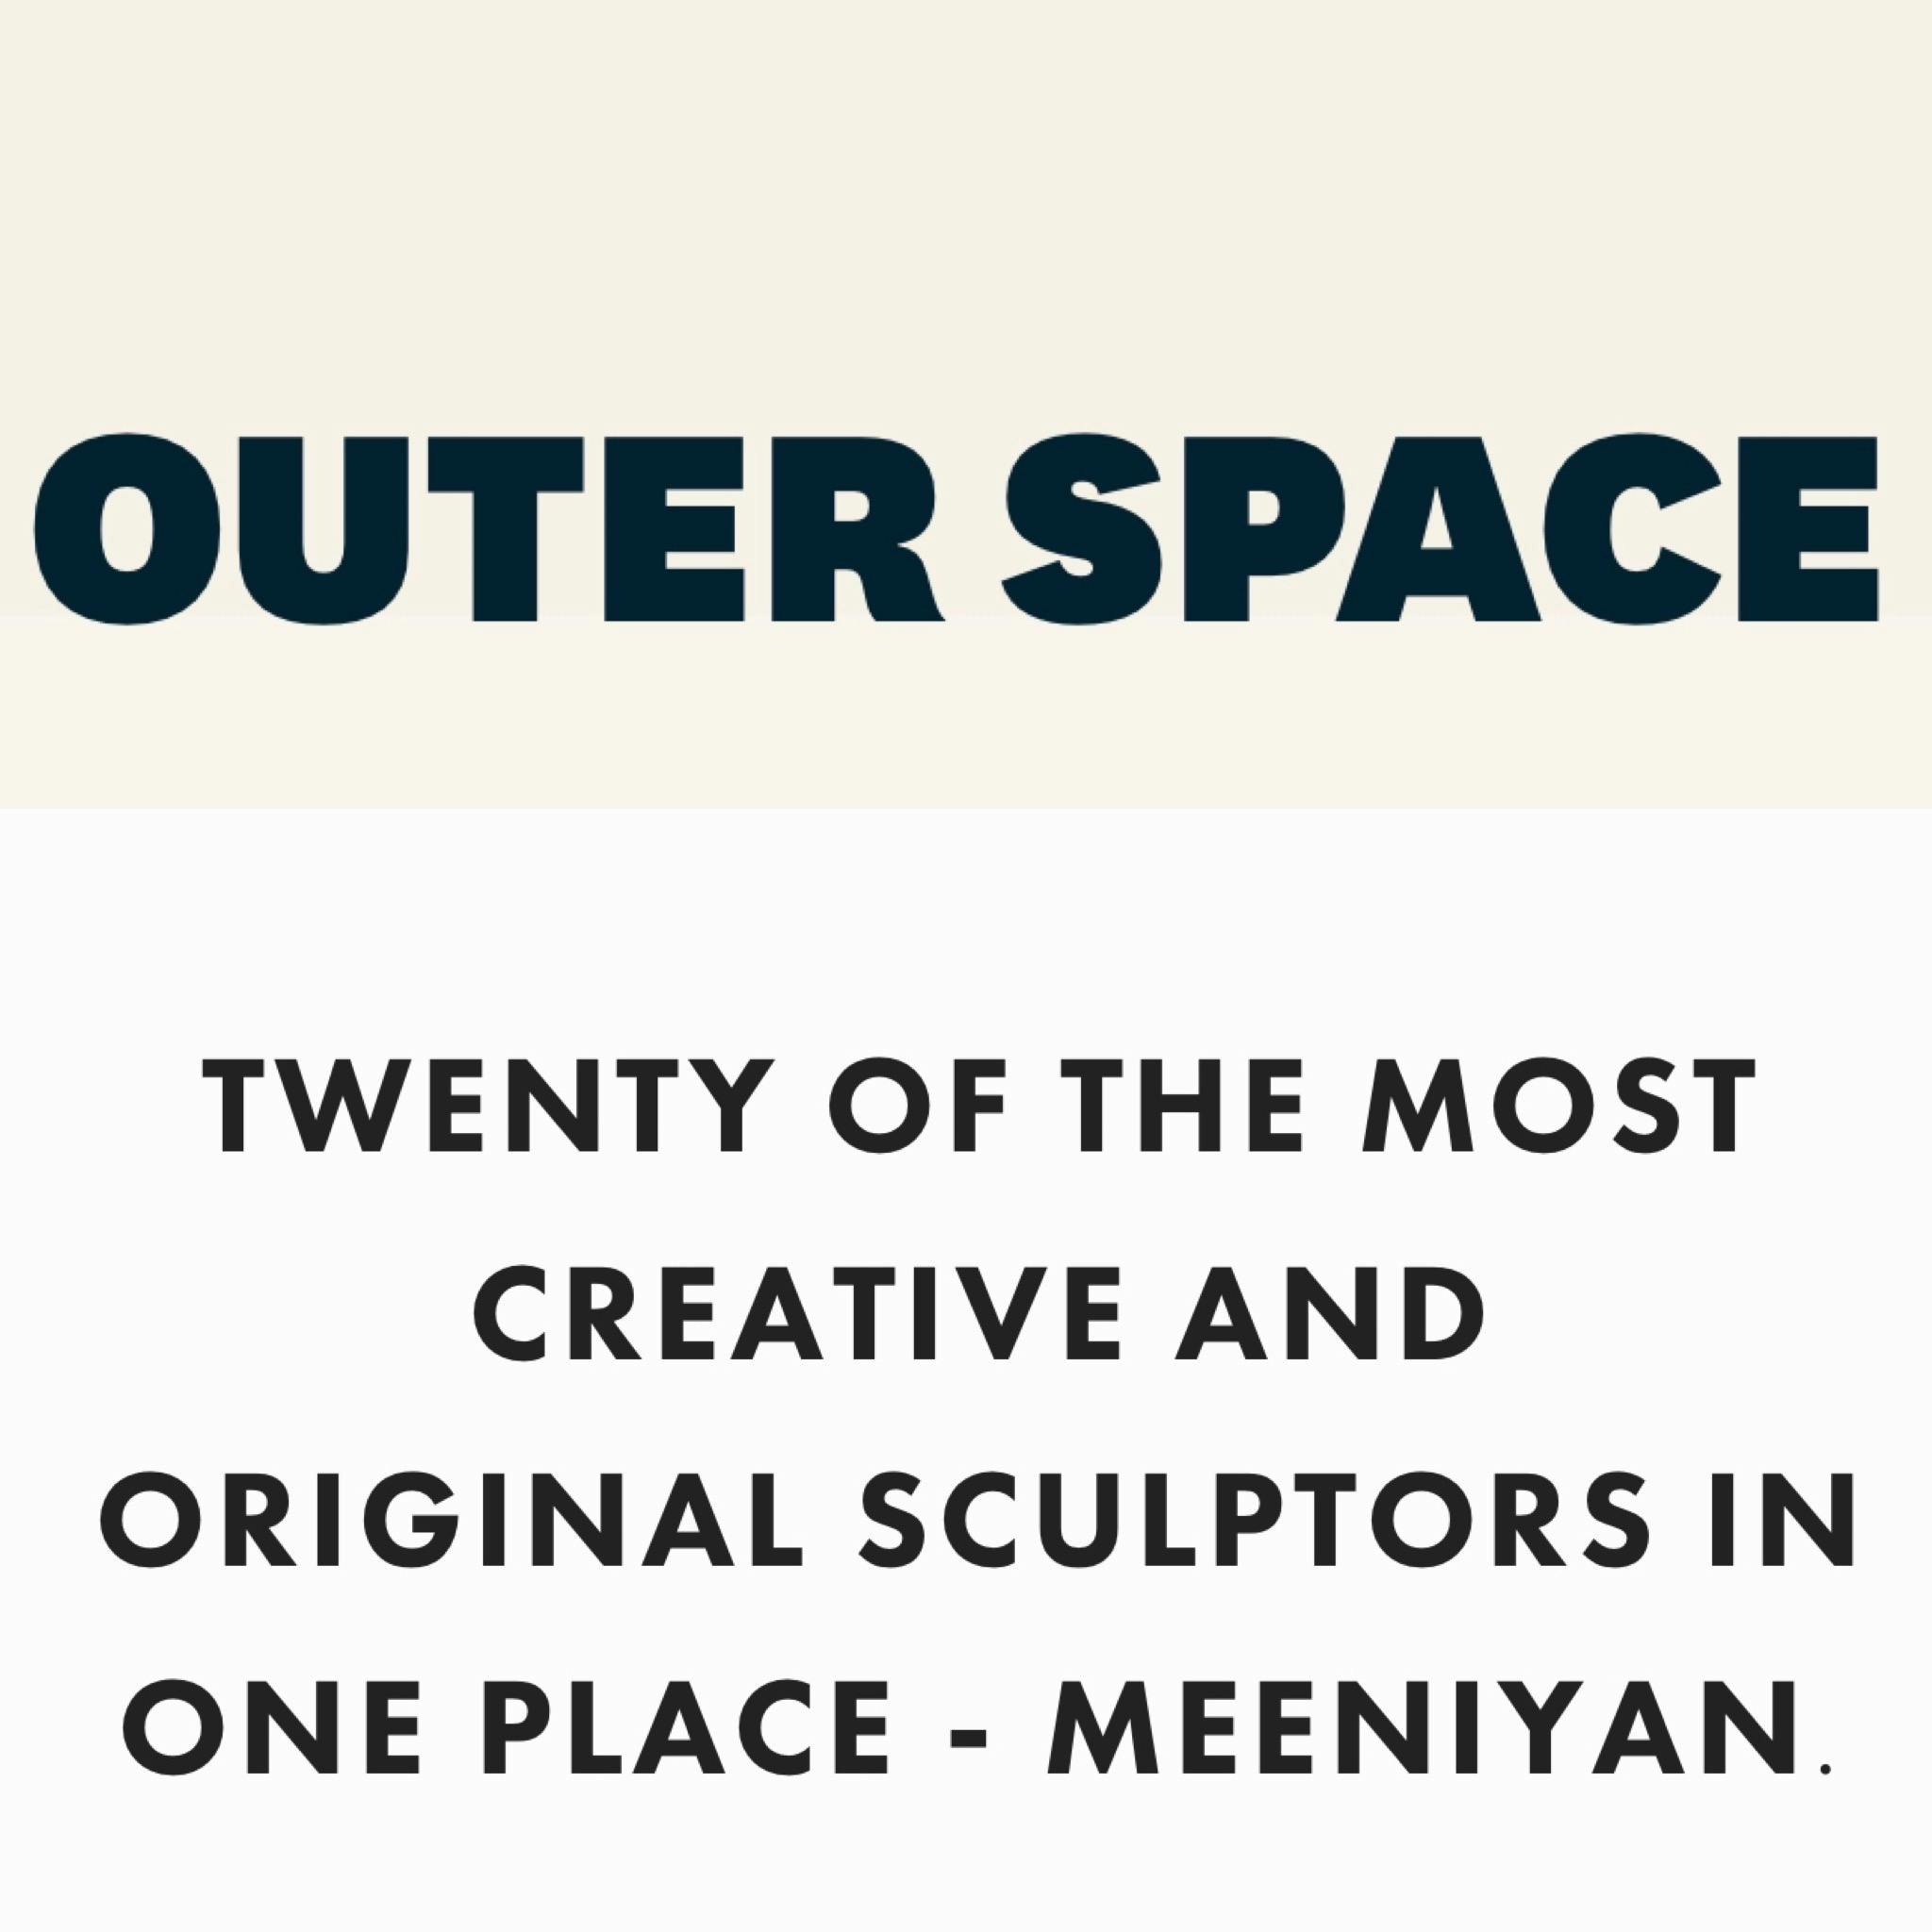 Outer Space Meeniyan outdoor sculptor gallery